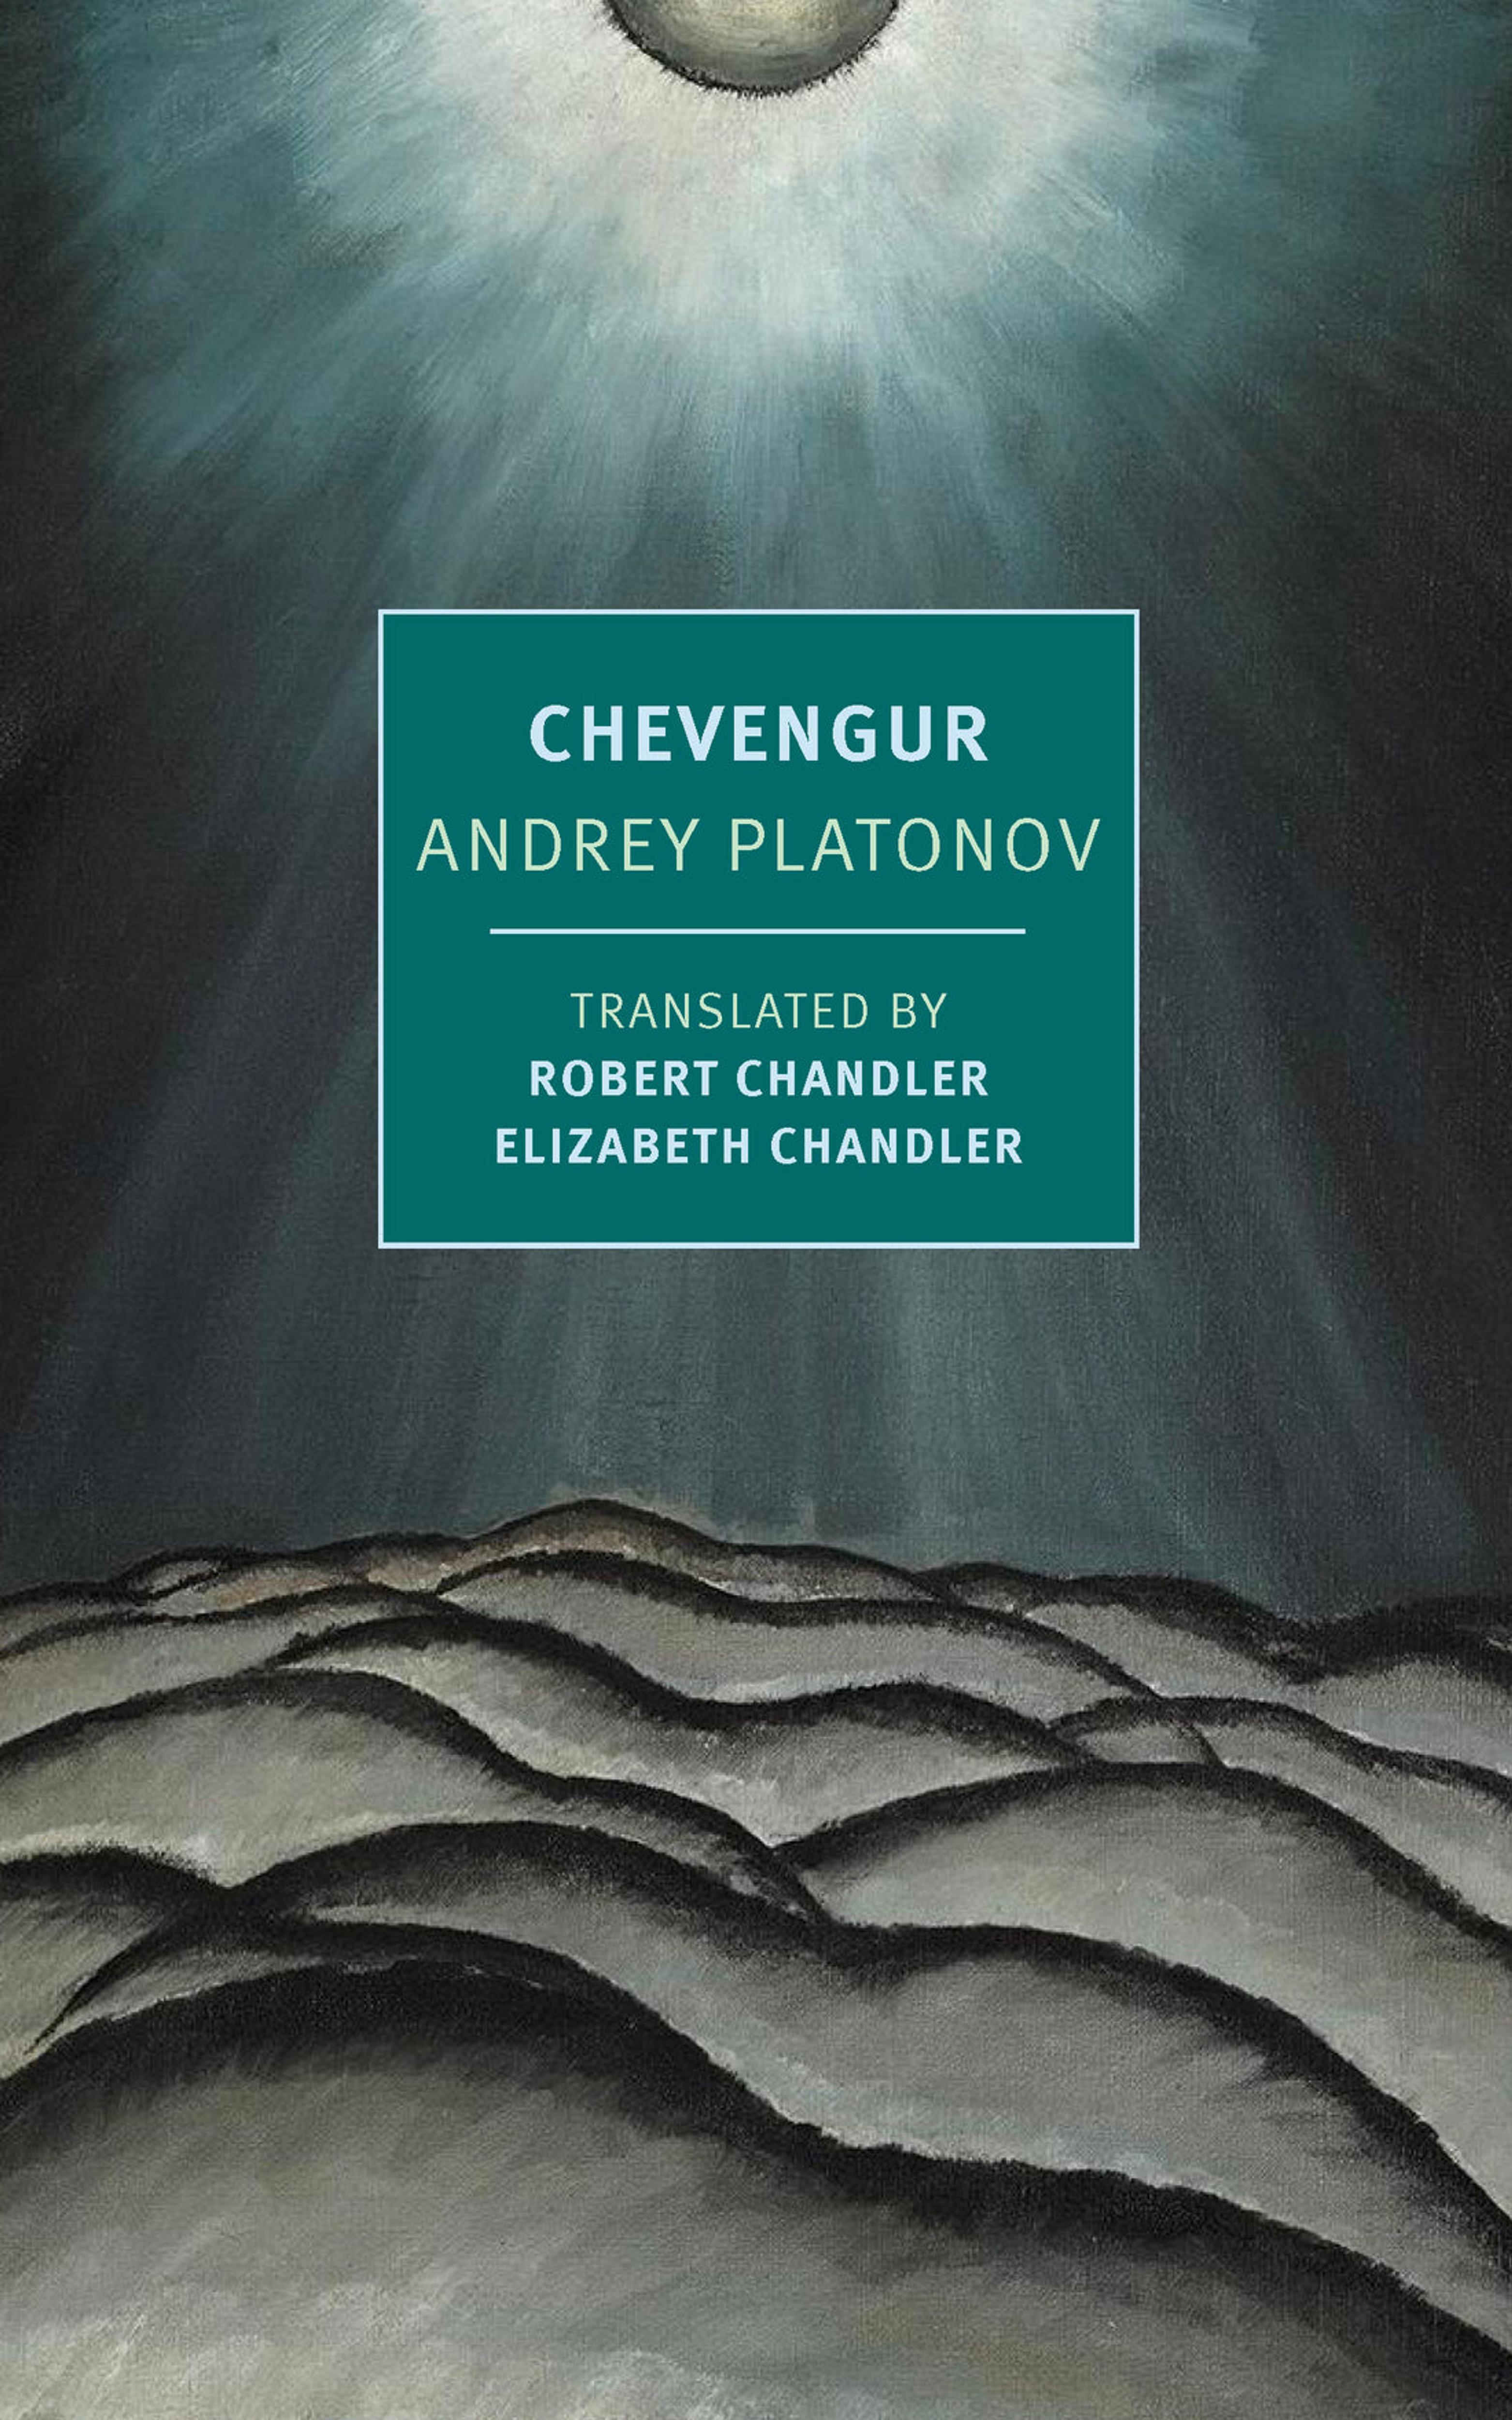 The Real Unrealists: On Andrey Platonov’s “Chevengur”